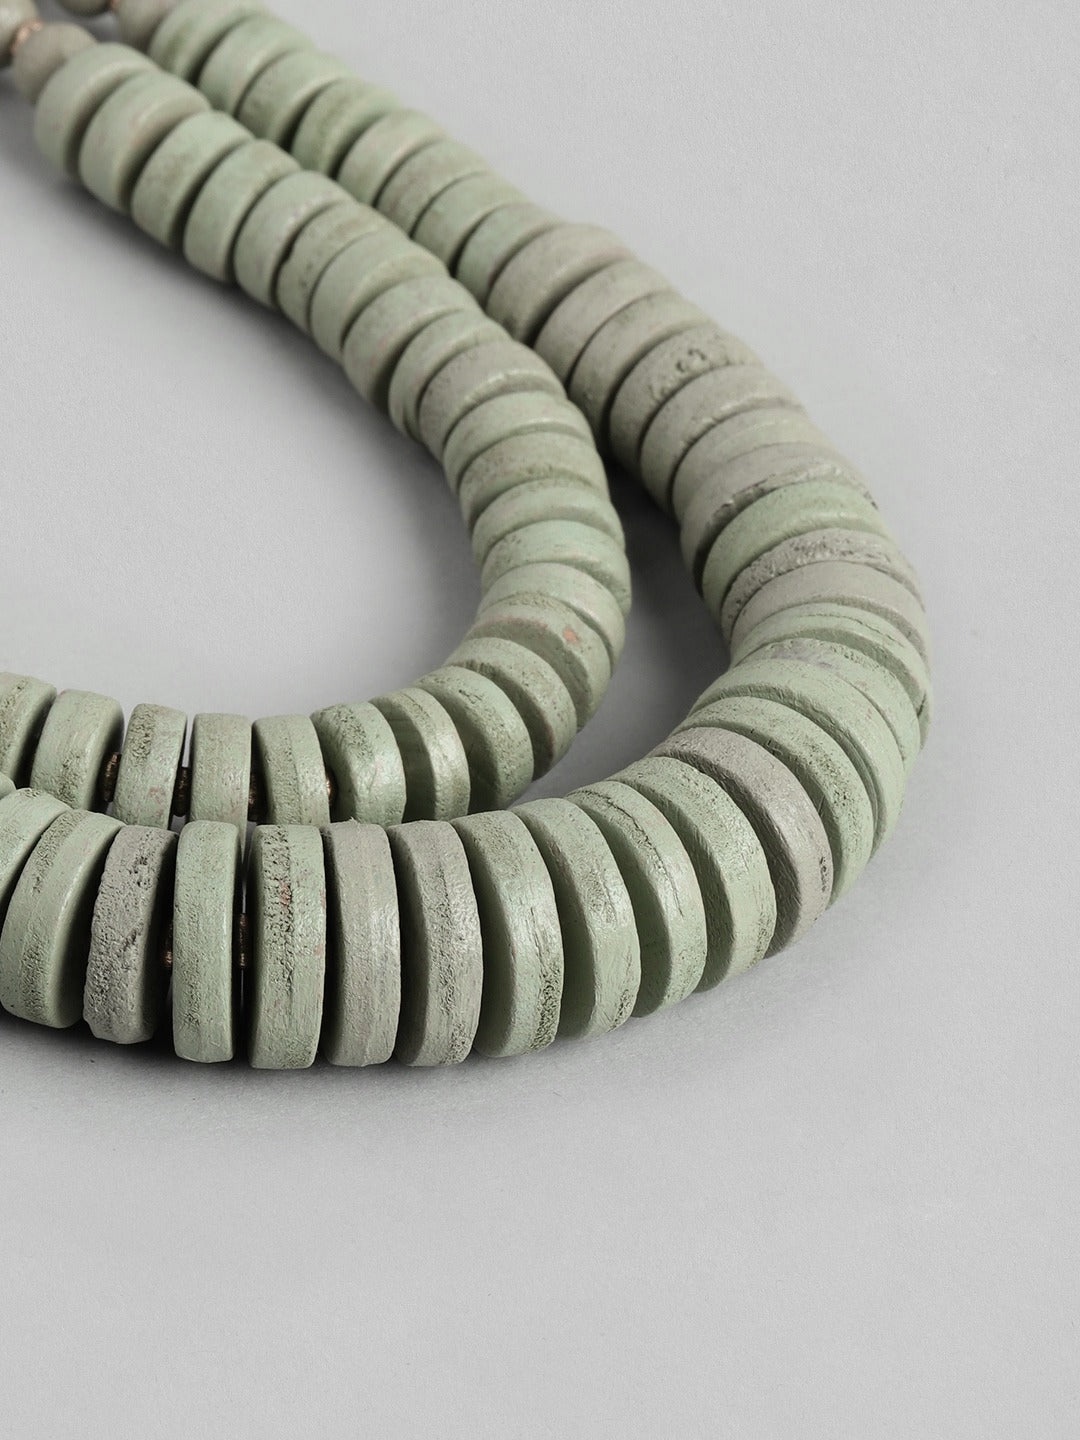 RICHEERA Green Layered Necklace